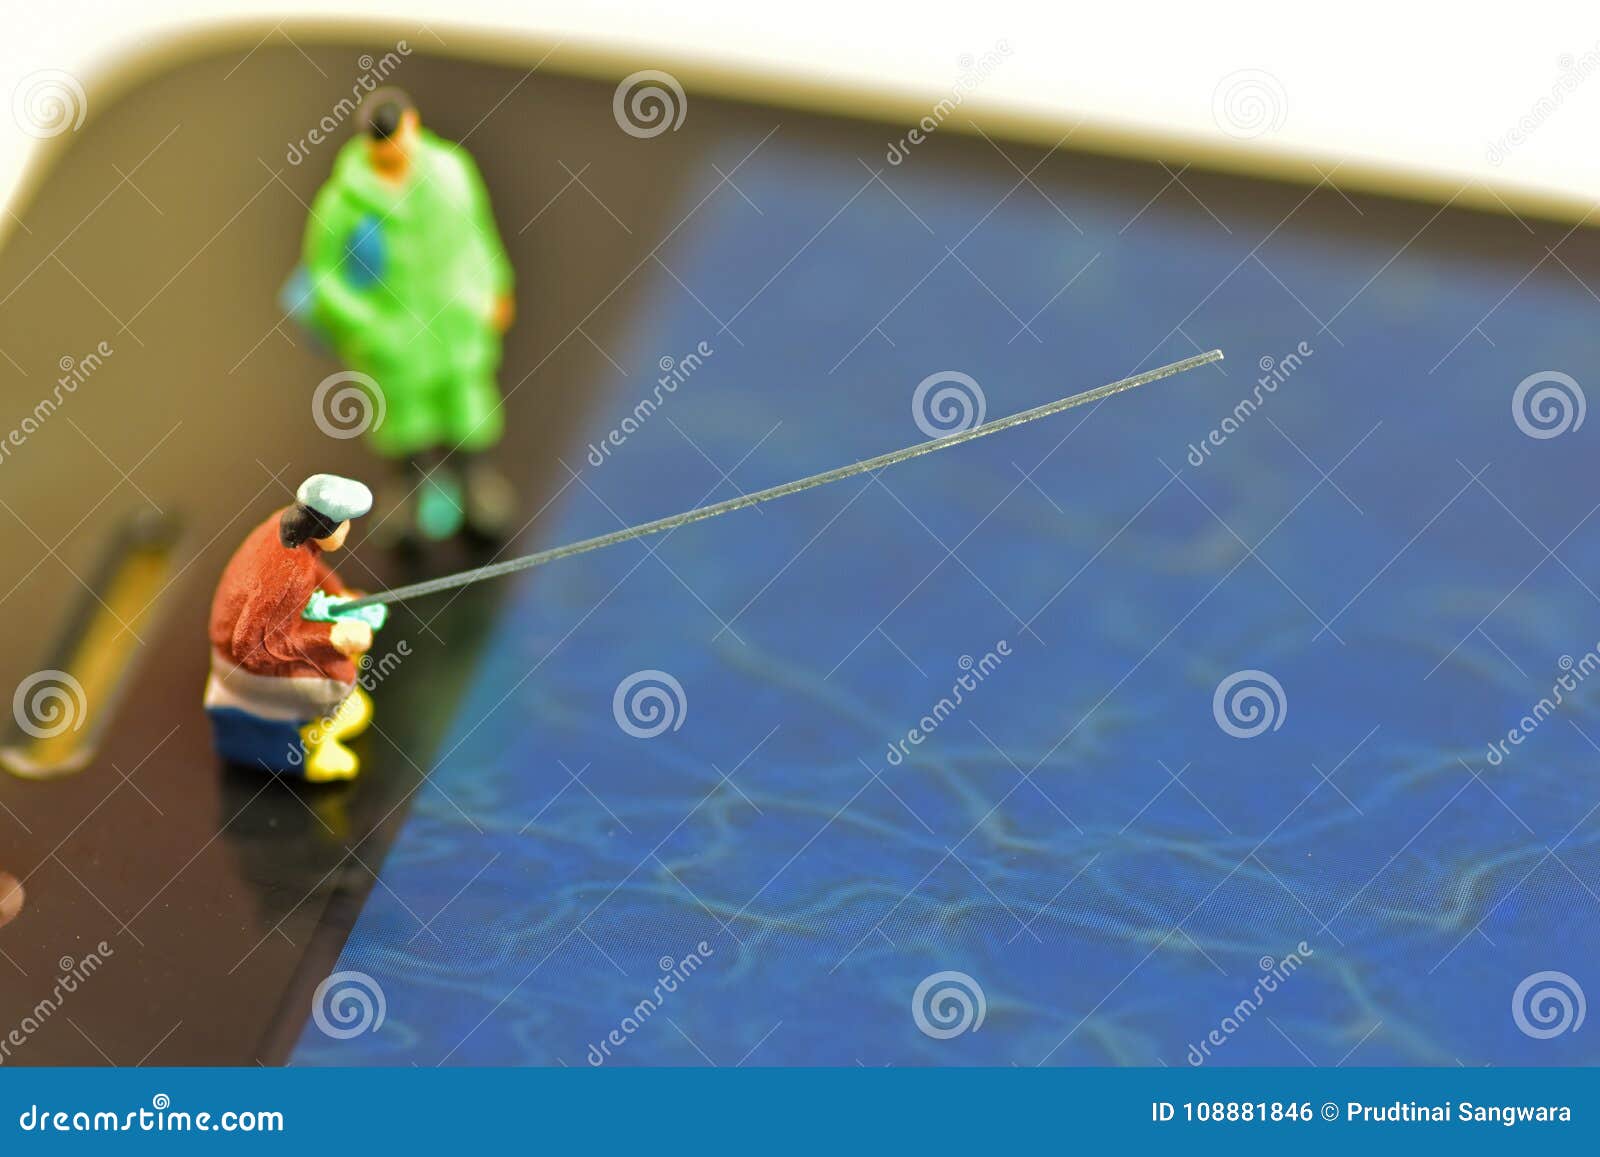 https://thumbs.dreamstime.com/z/fishing-smartphone-screen-closeup-two-miniature-figures-one-fishing-pole-edge-smartphone-screen-showing-108881846.jpg